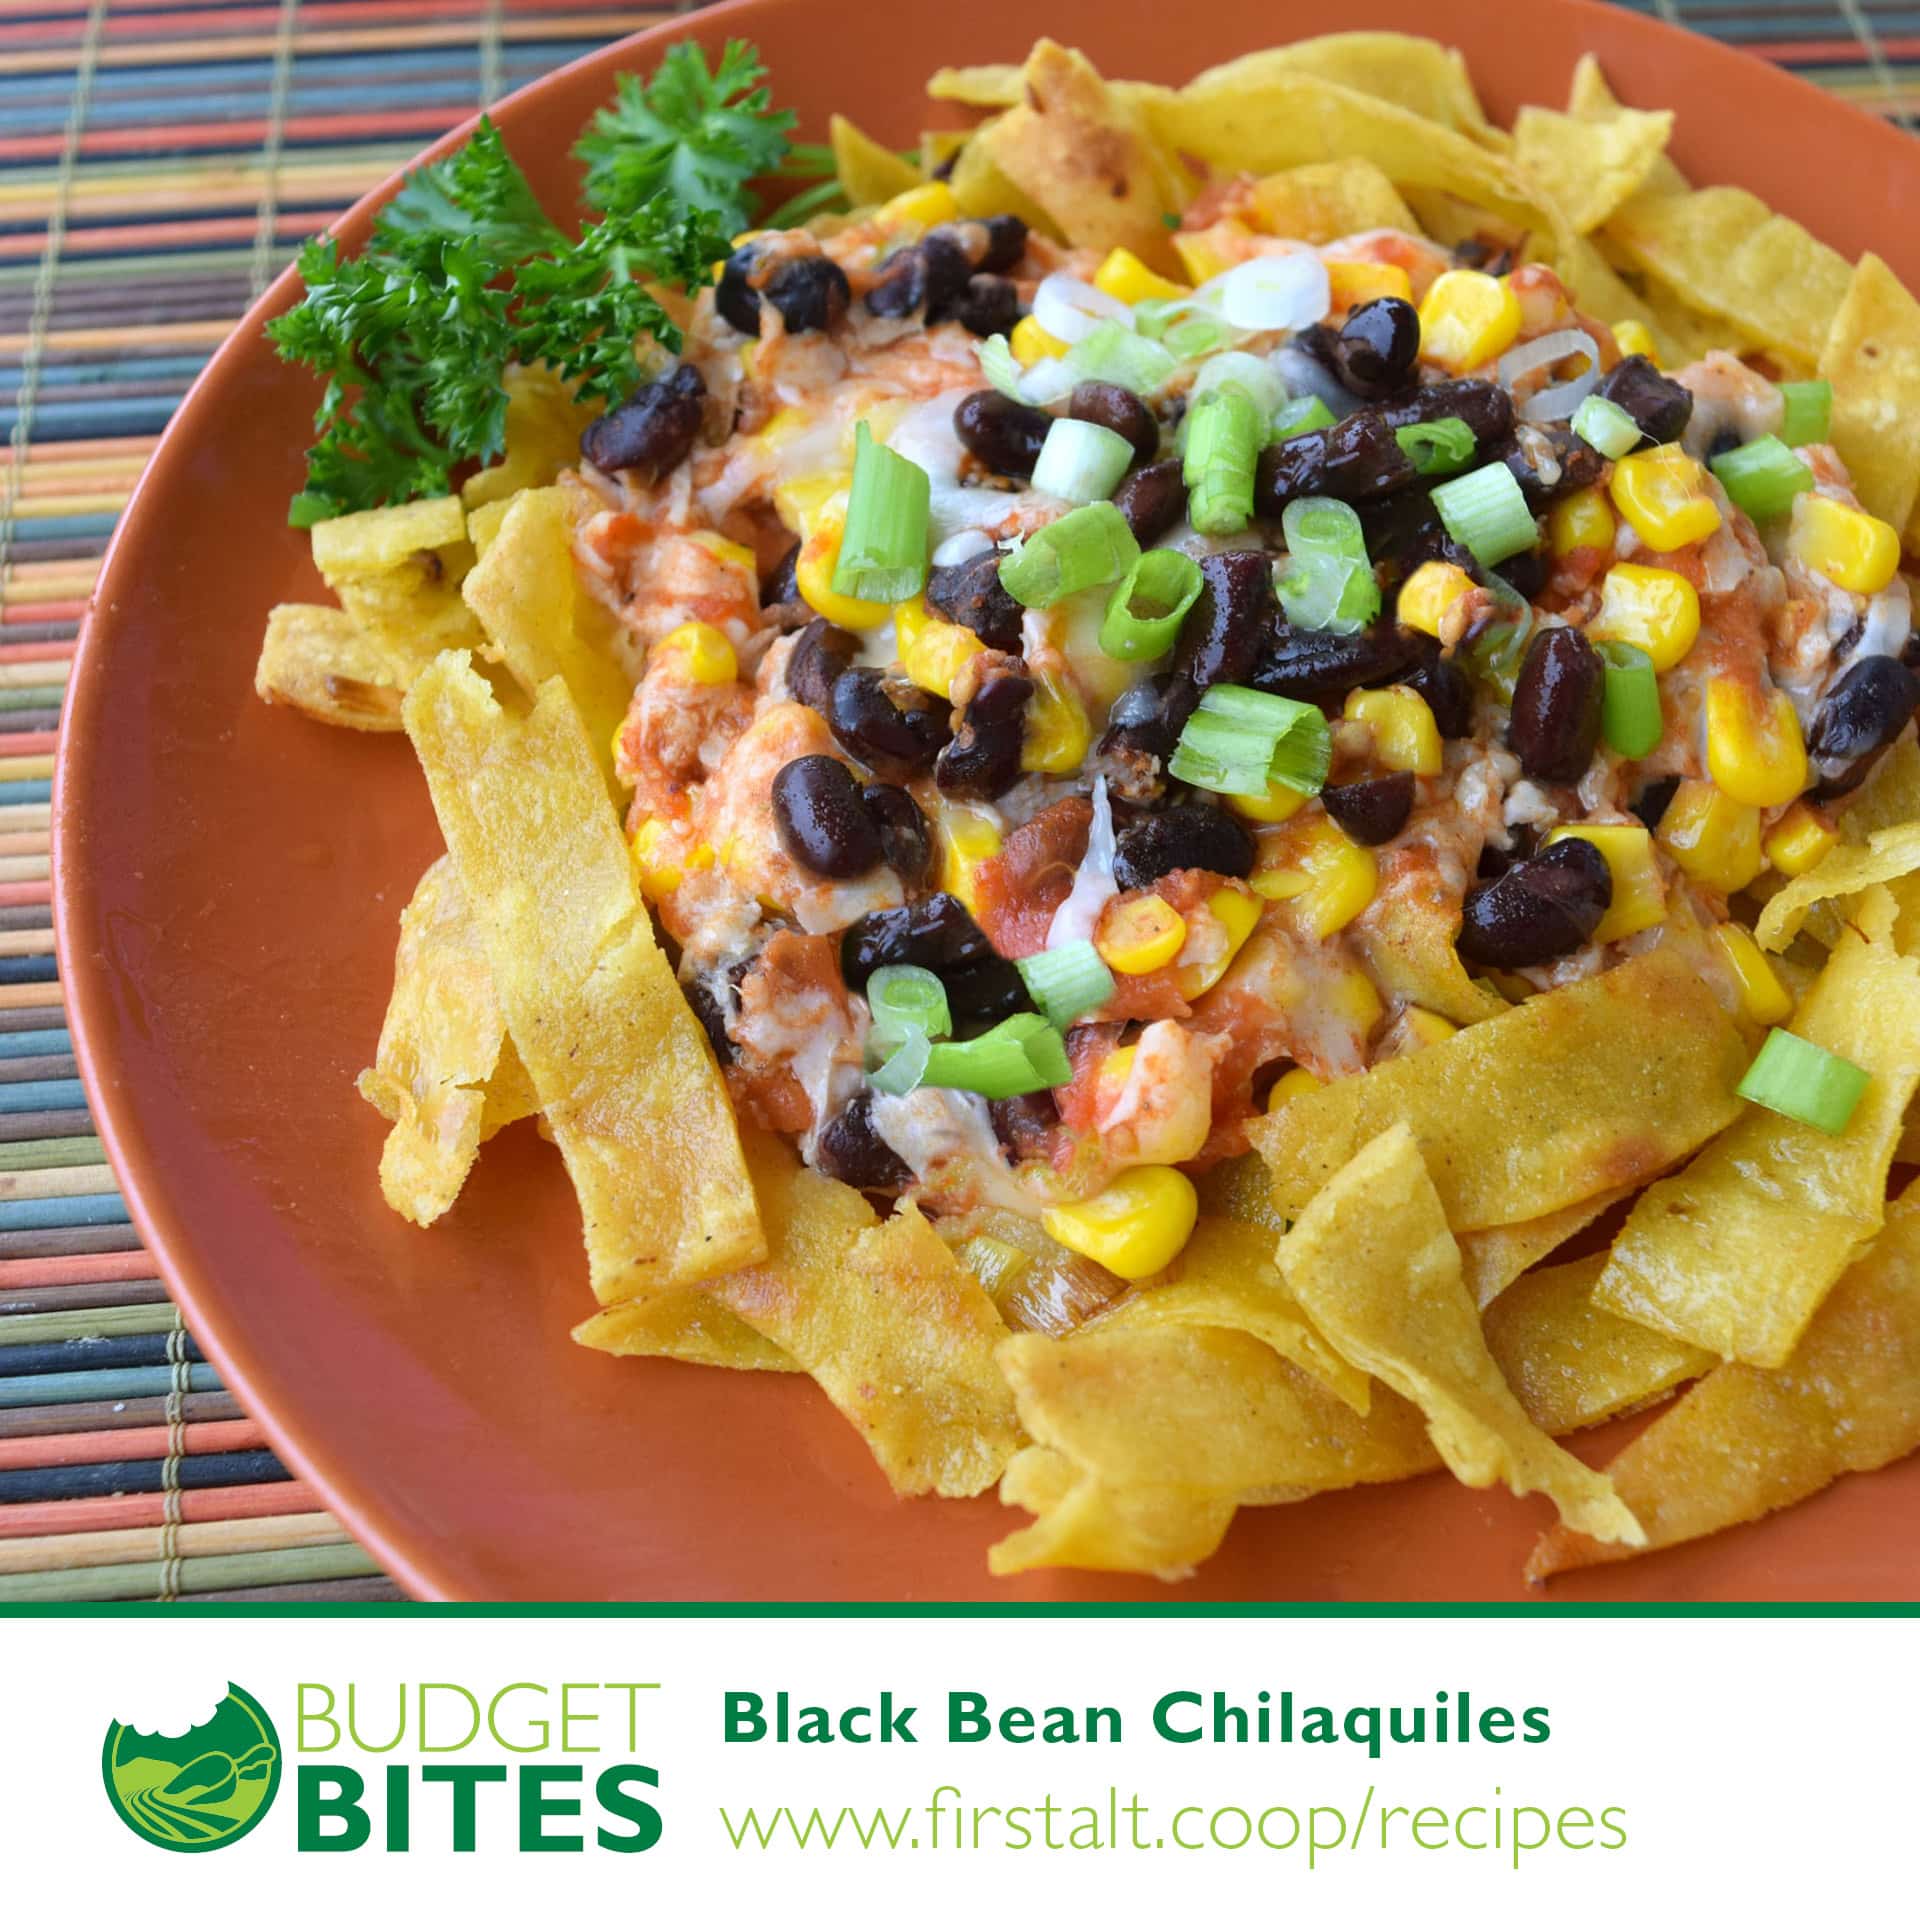 Budget Bites Online – Black Bean Chilaquiles